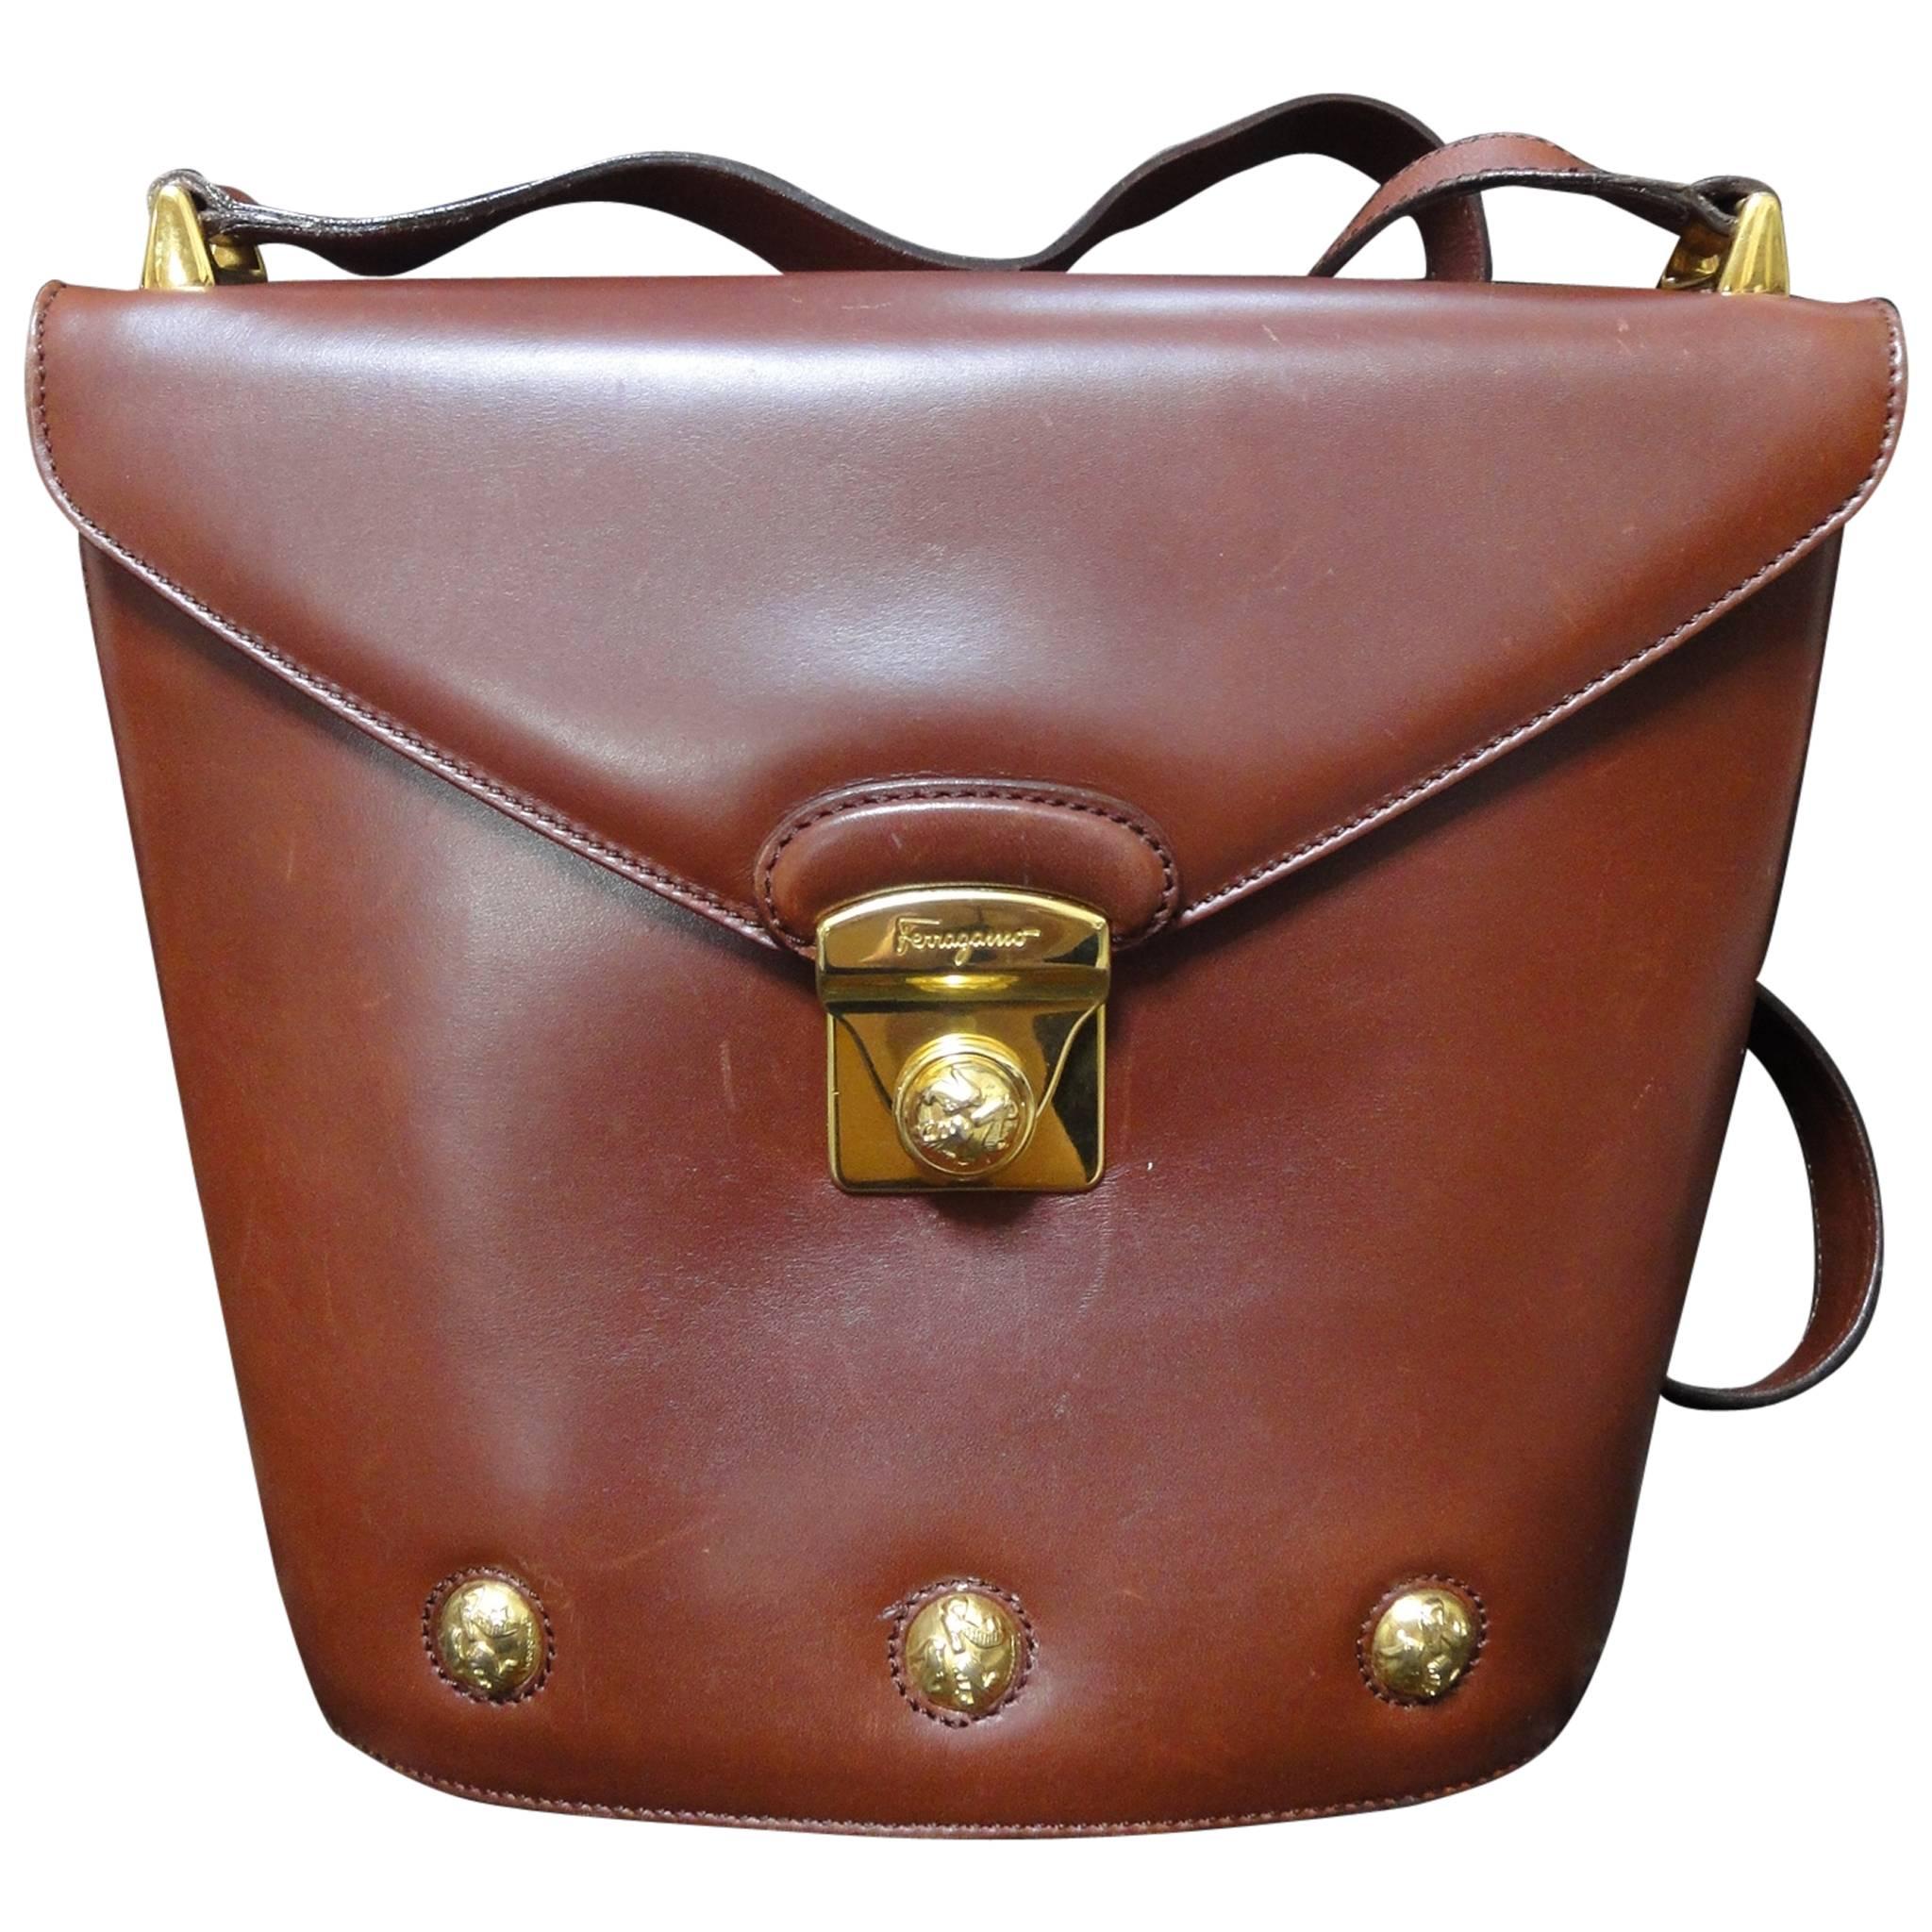 Vintage Salvatore Ferragamo brown leather trapezoidal shape purse with motifs.